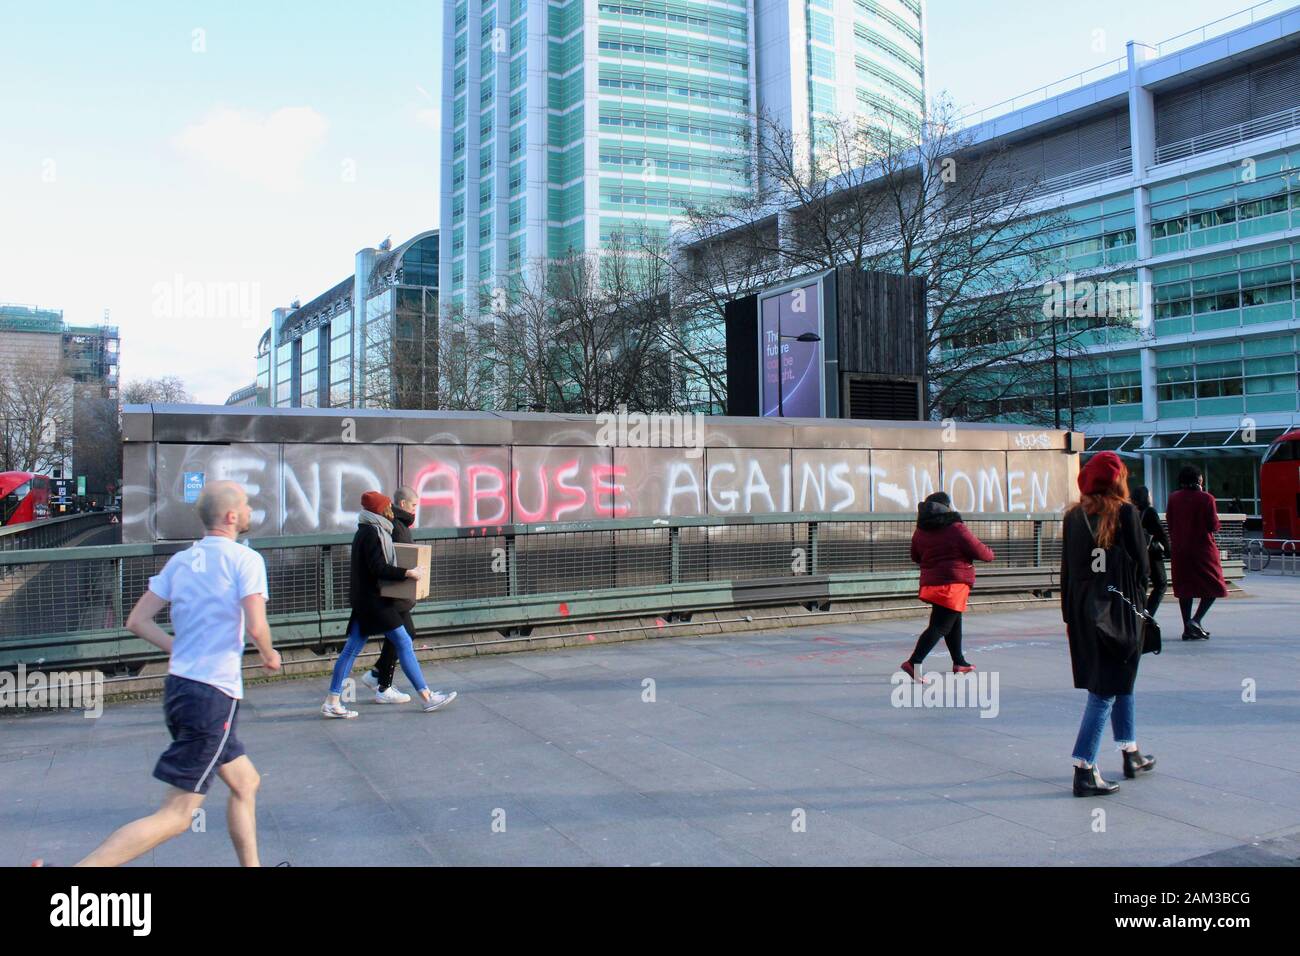 Beenden Sie Missbrauch gegen Frauen Graffiti Central london england UK Stockfoto